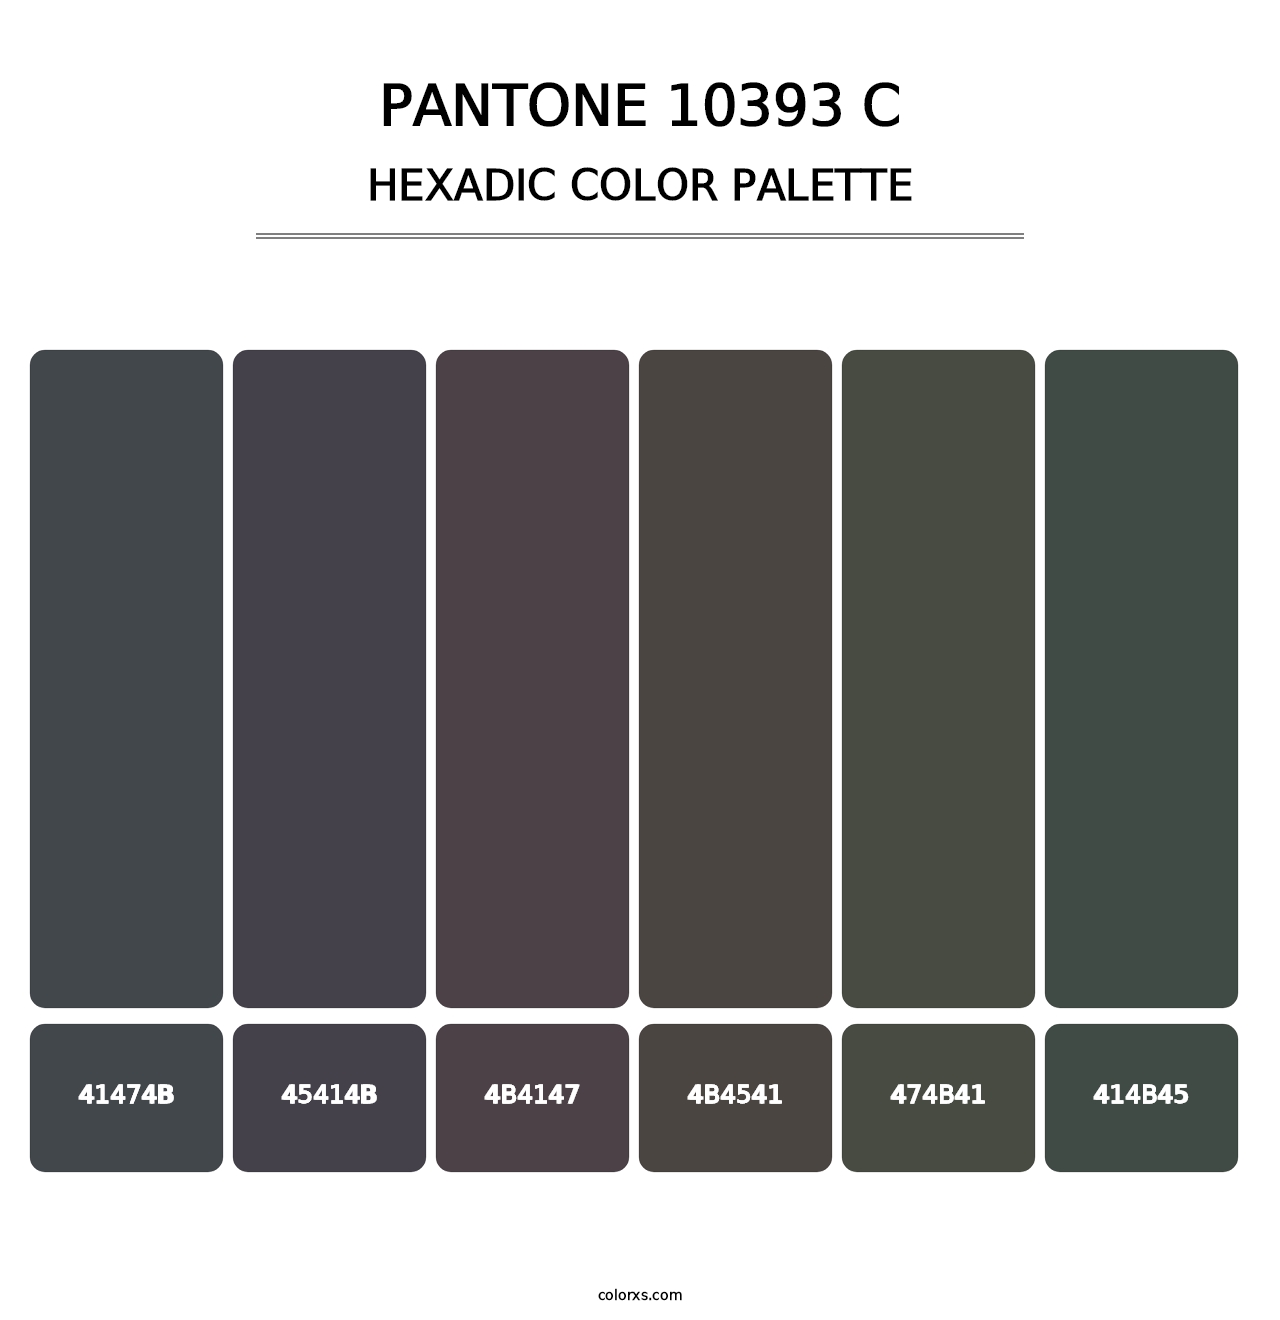 PANTONE 10393 C - Hexadic Color Palette